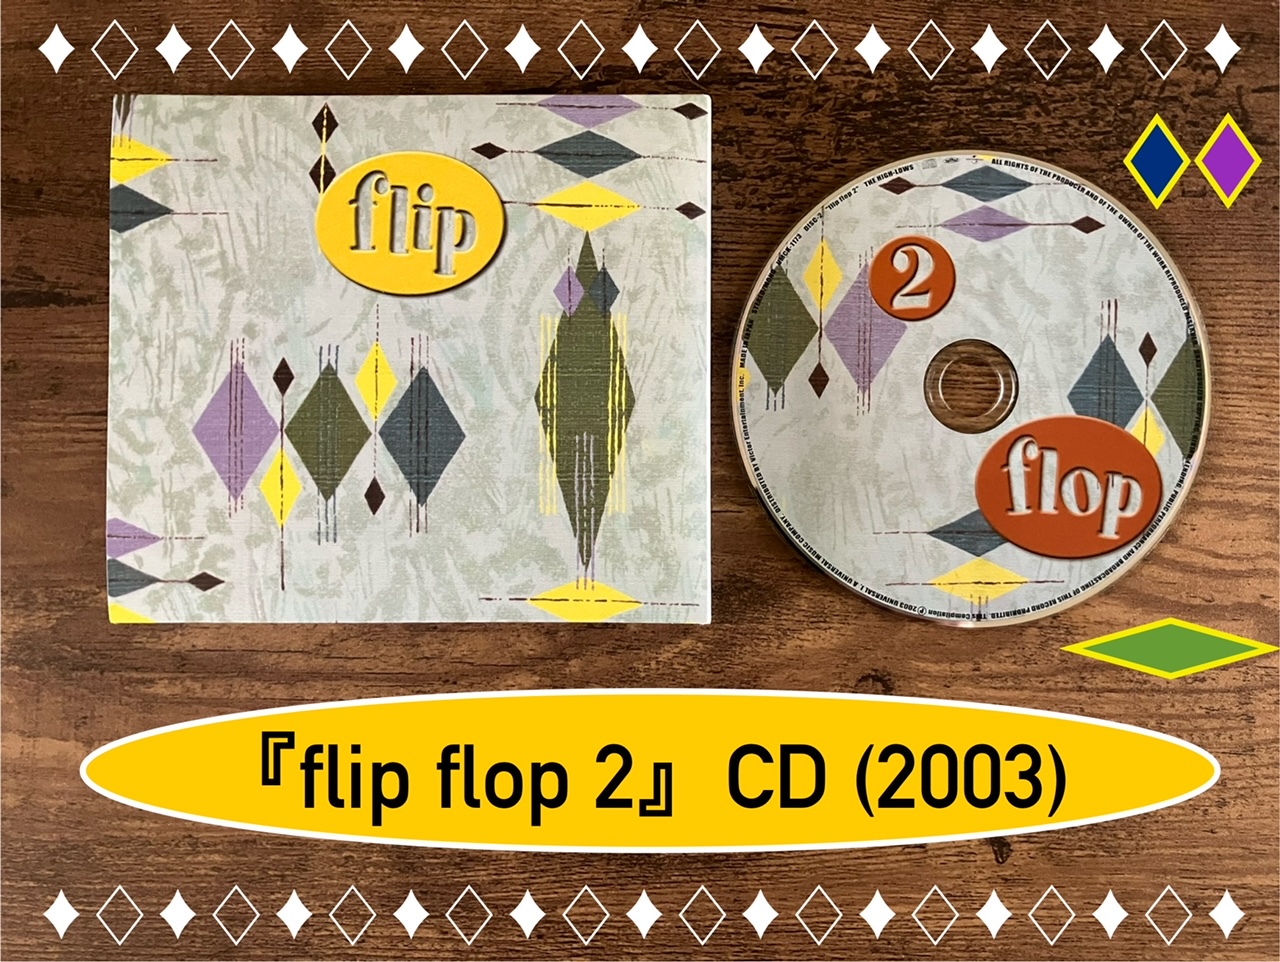 THE HIGH-LOWS/flip flop 2】オリジナルアルバムのその先にある極み!! 企画盤第2弾!! – M☆MUSIC